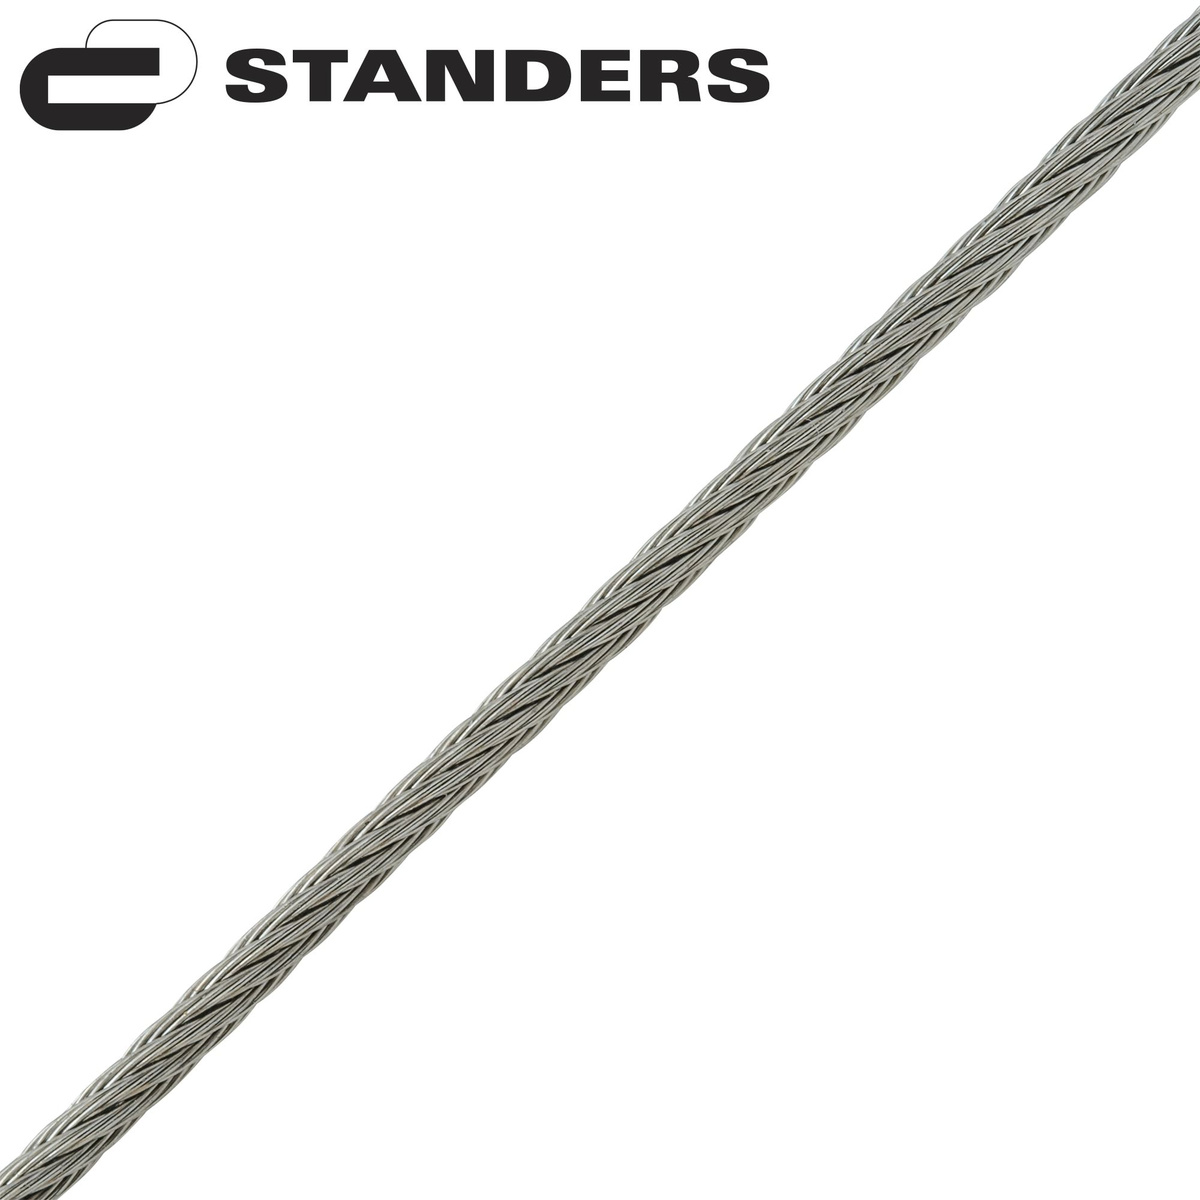 Трос нержавеющая сталь А4 Standers DIN 3055 2 мм 10 м, цвет серебро